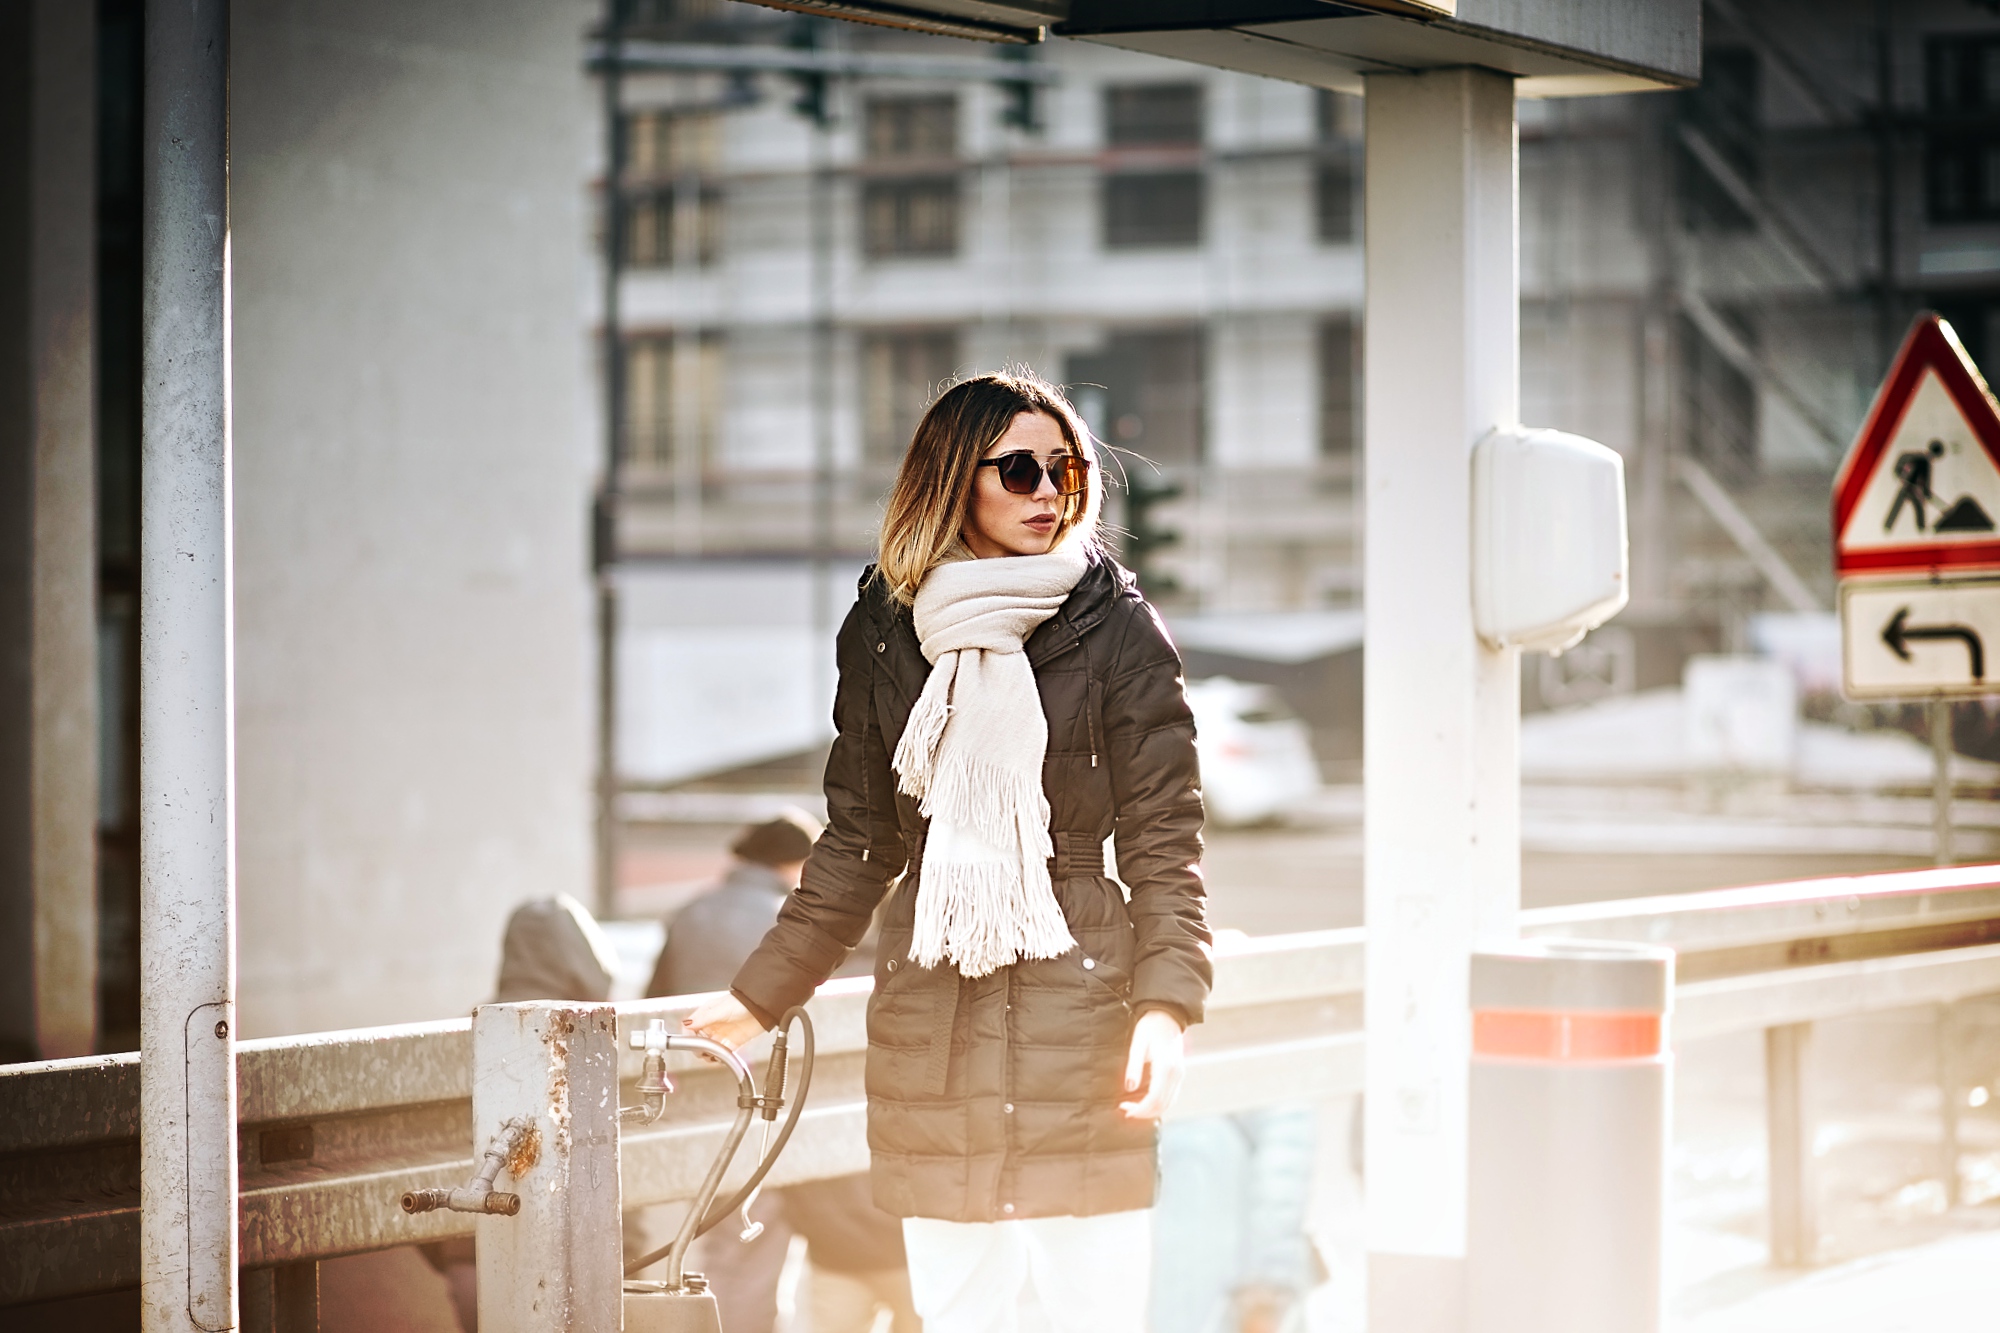 minamia-fashion-blogger-fashionblogger-mode-outfit-vogue-ootd-streetstyle-inspiration